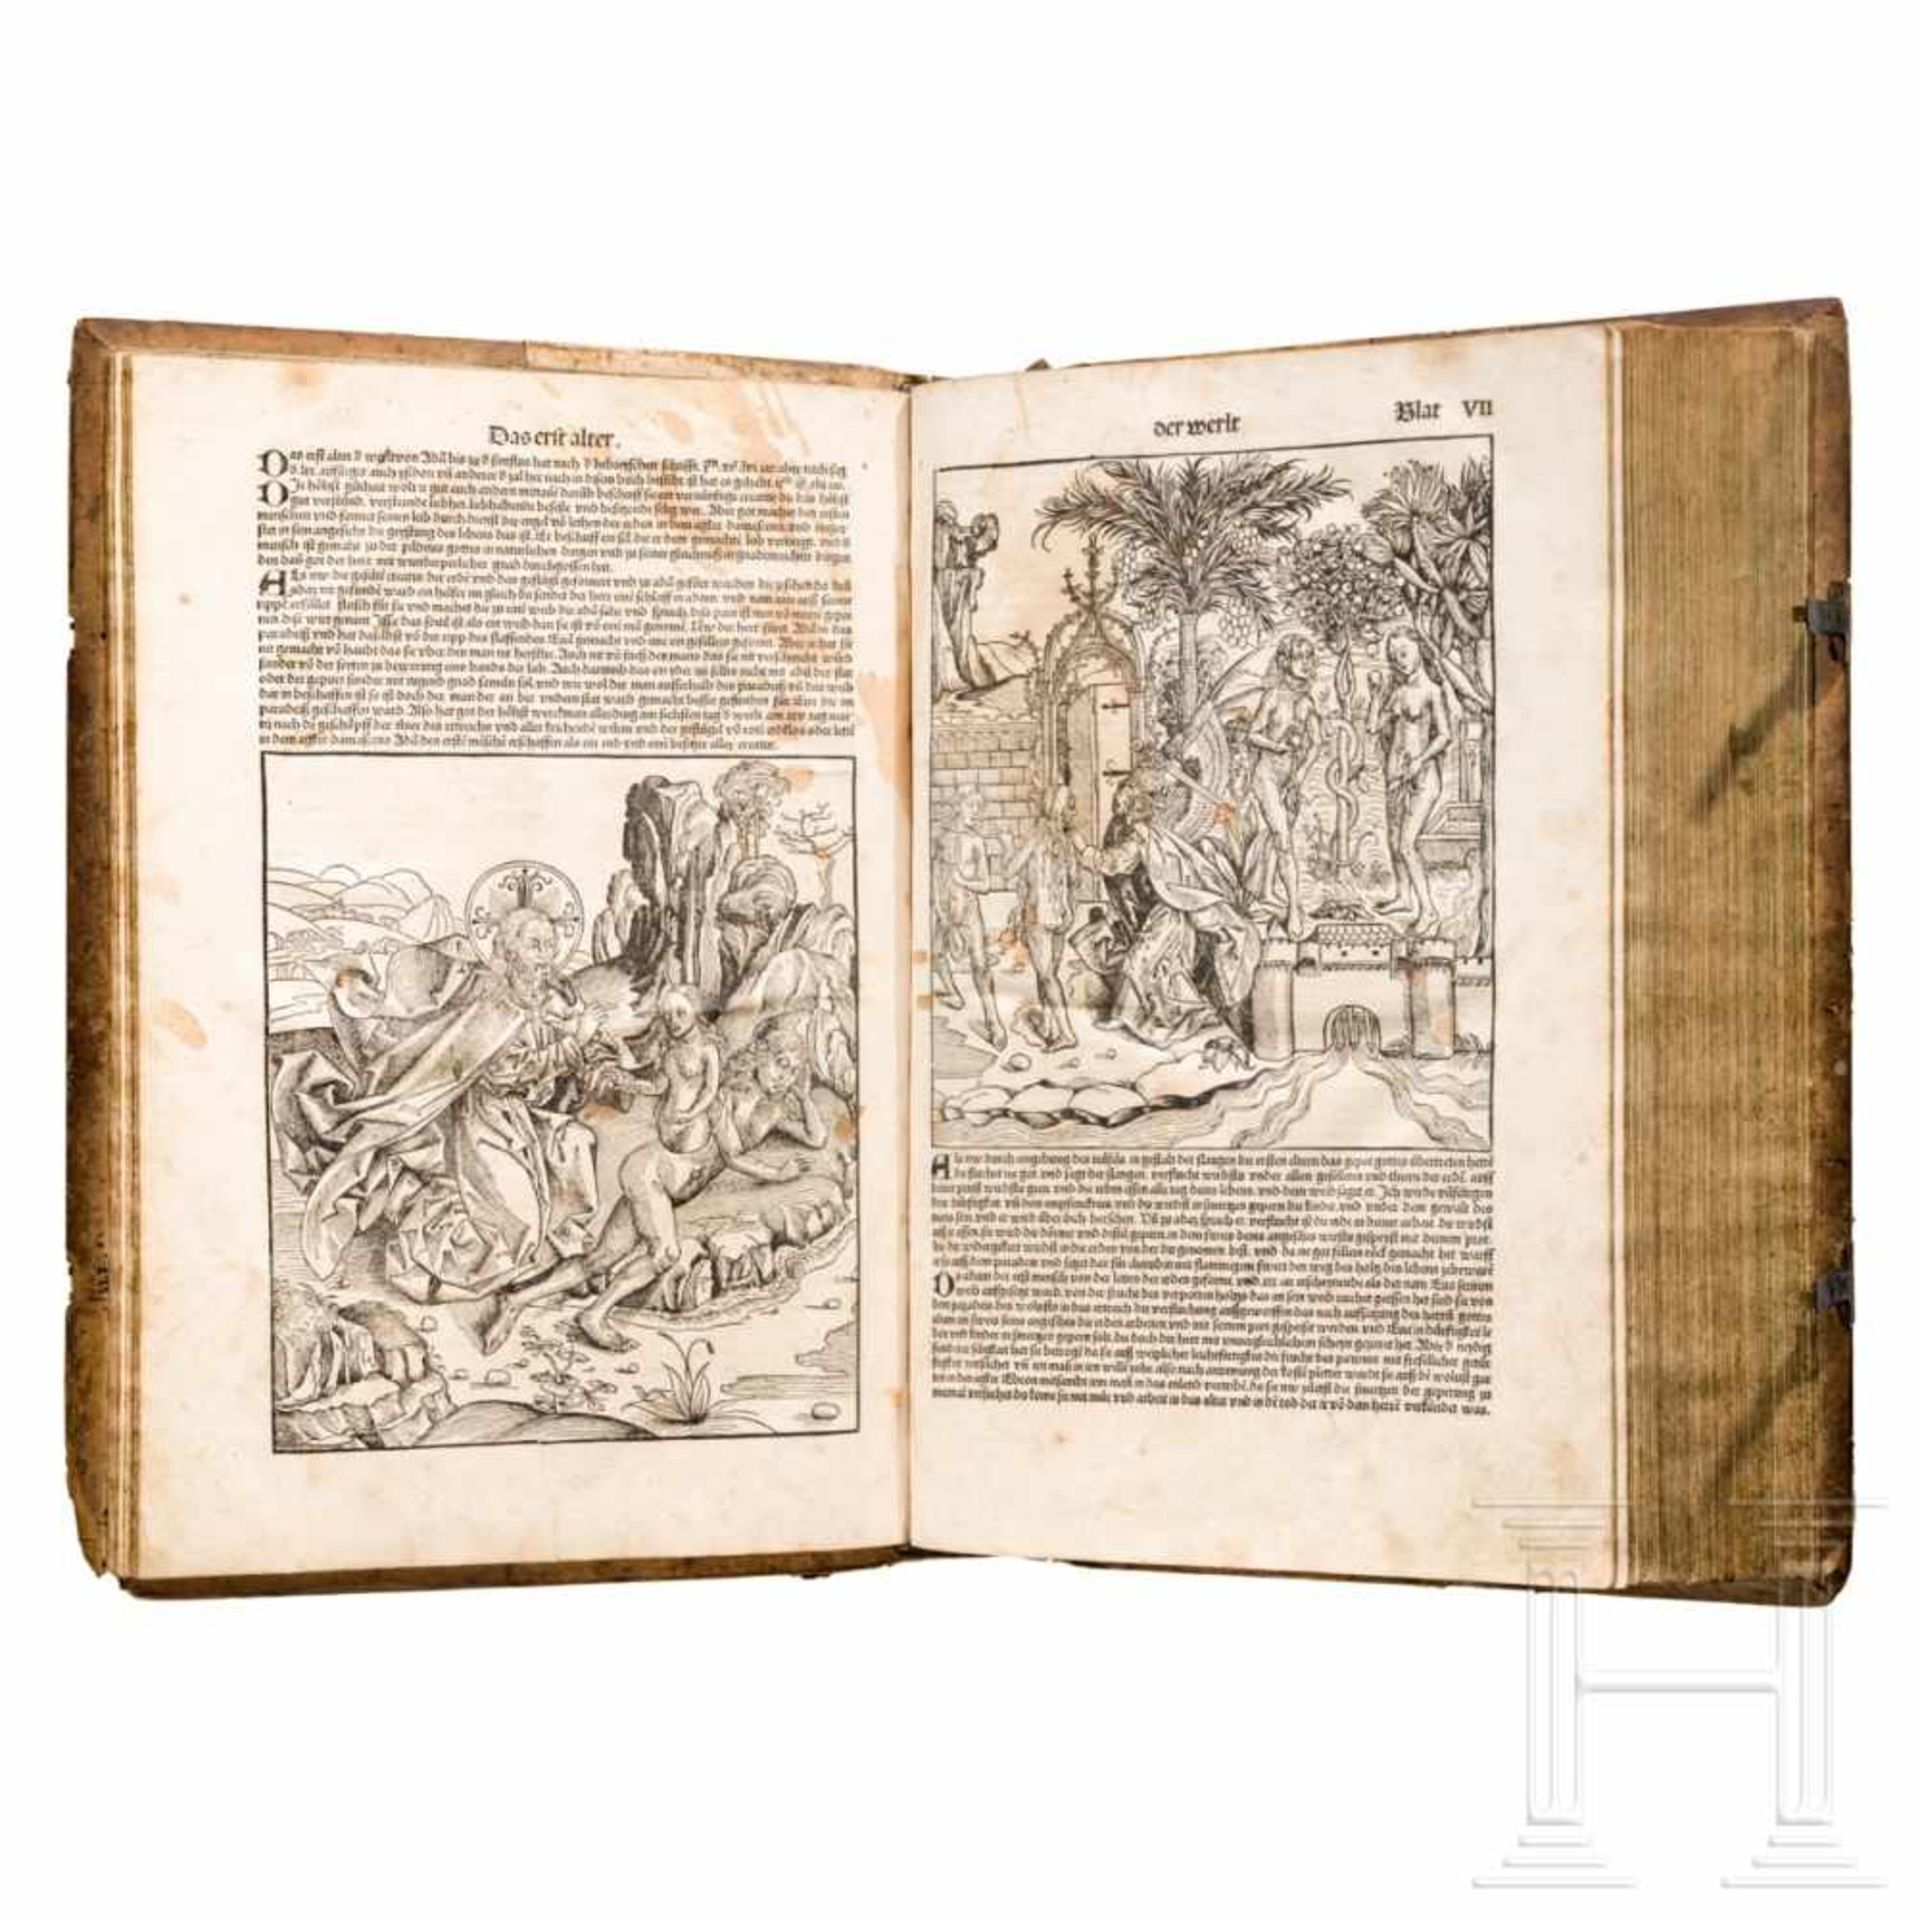 Hartmann Schedel, Das Buch der Chroniken, Nürnberg, A. Koberger, 1493 - Bild 41 aus 51